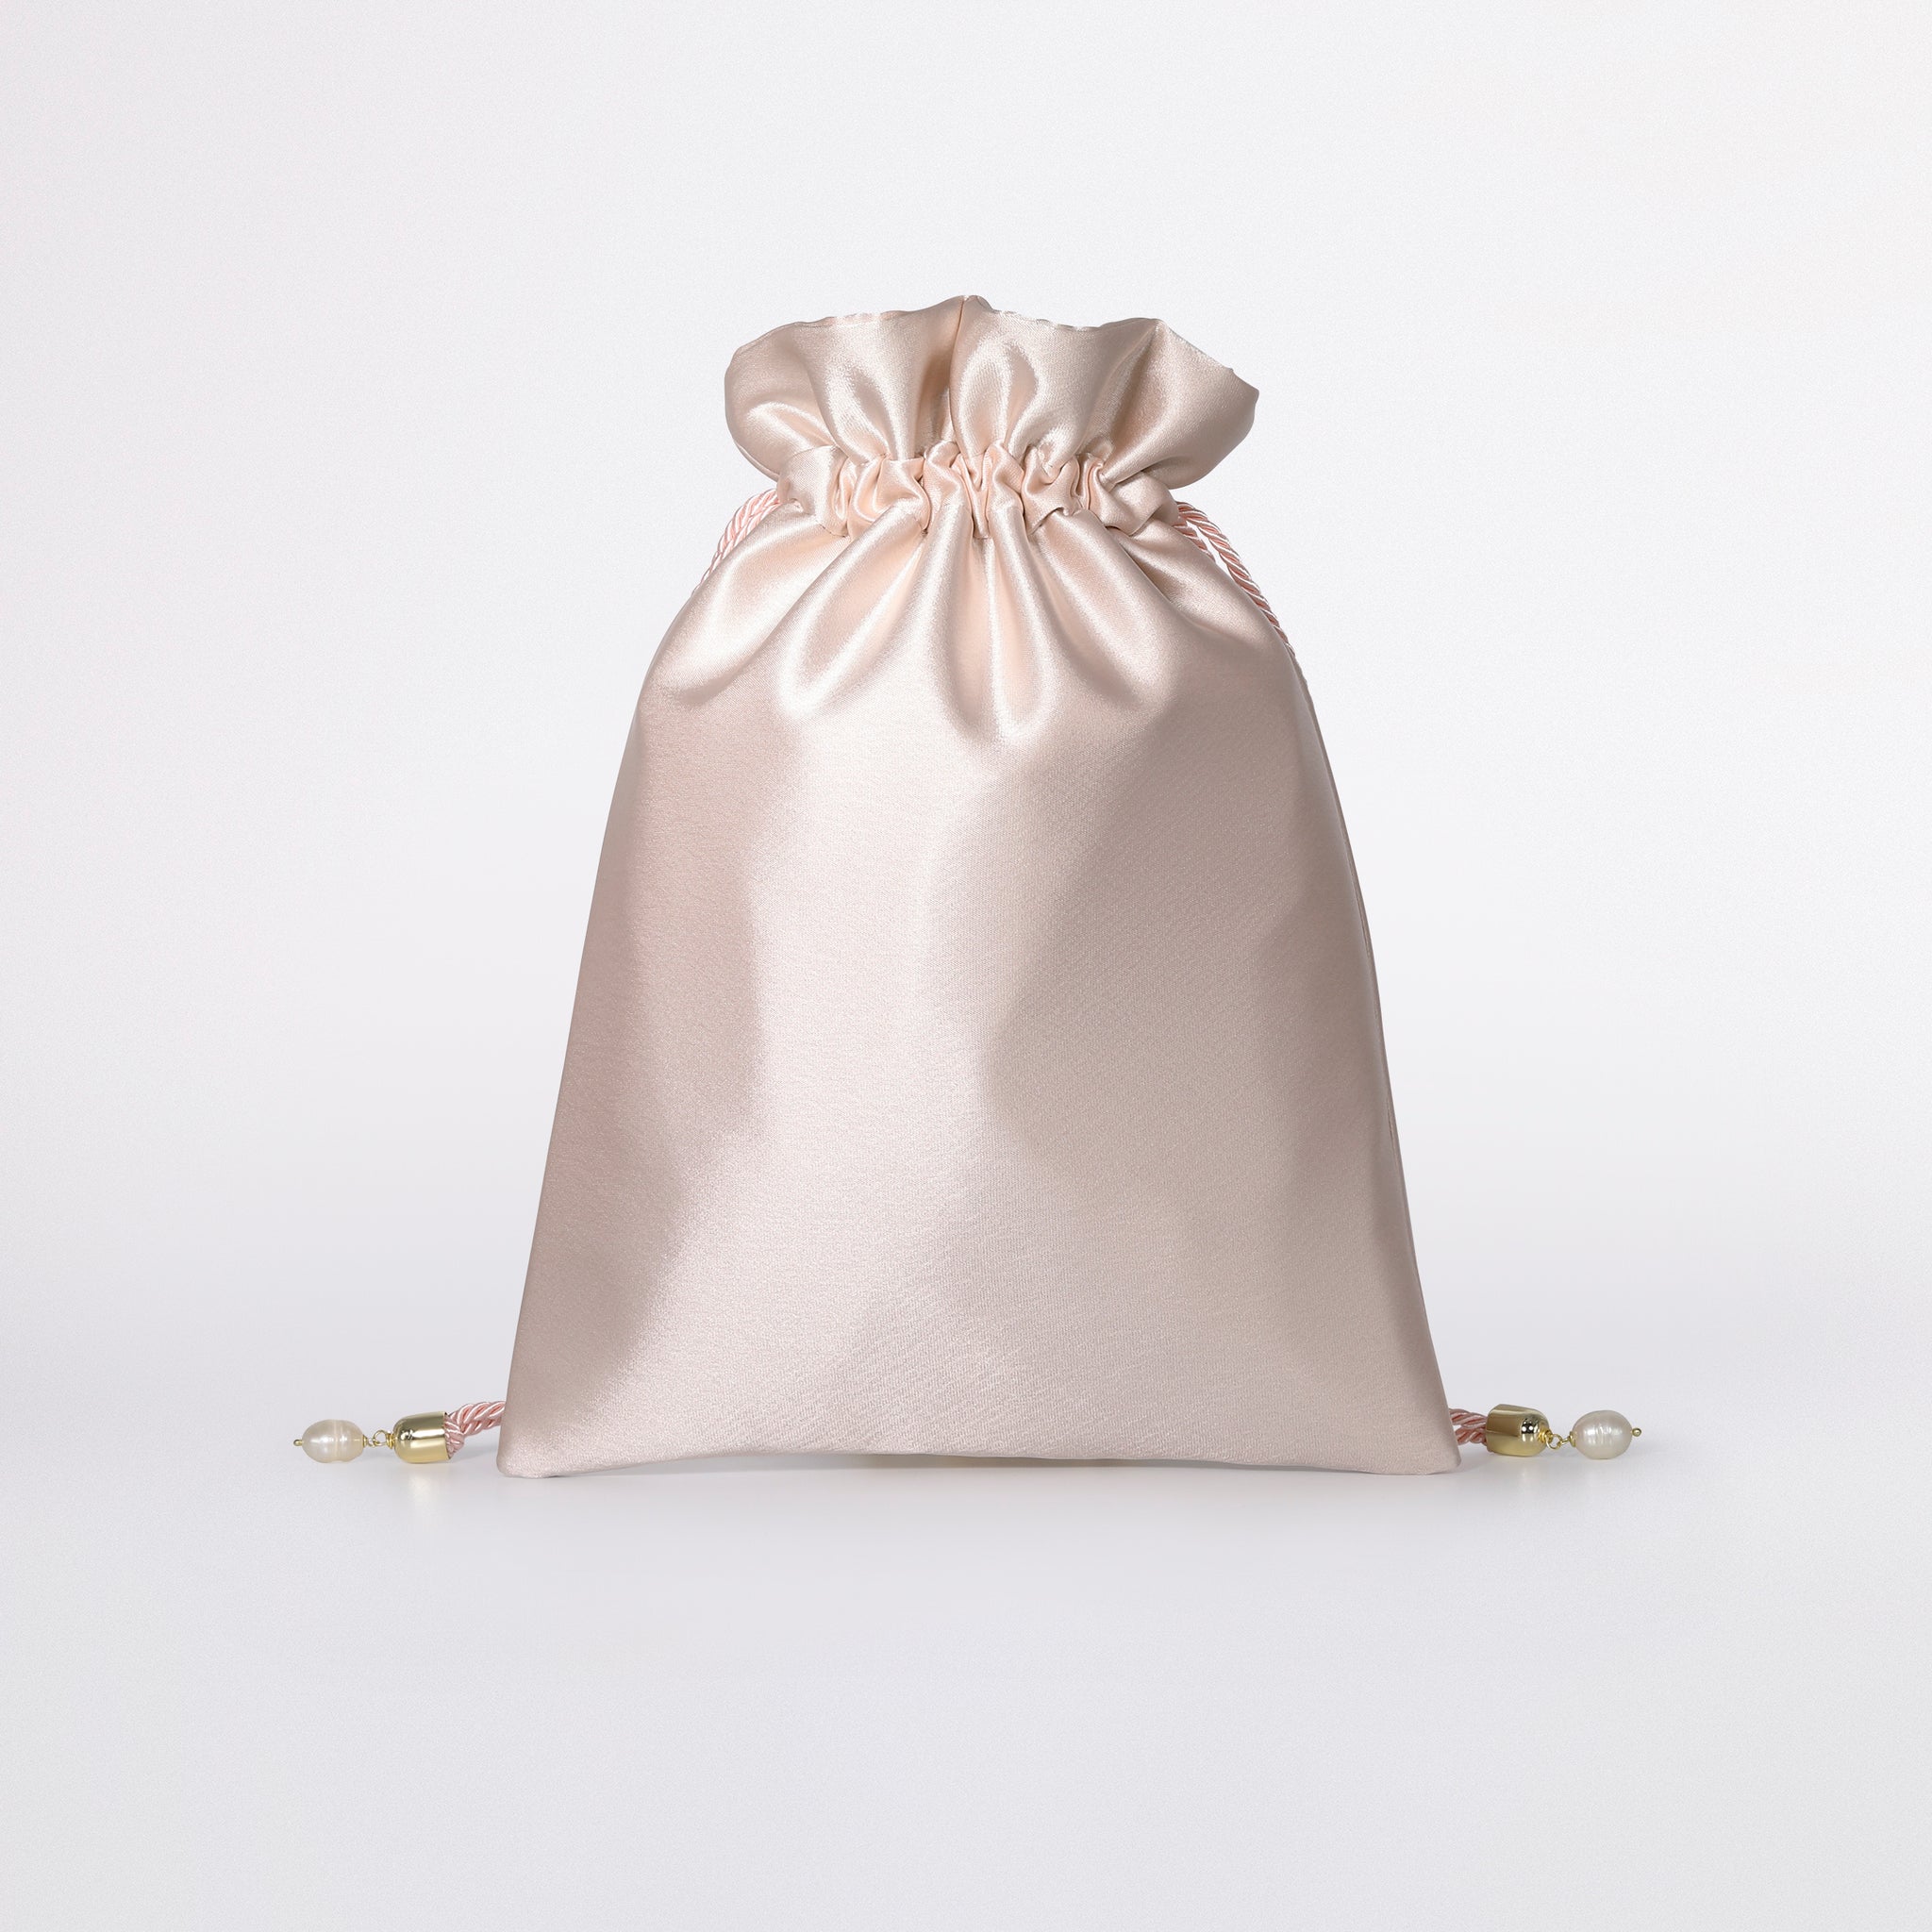 Giulia flat bag in colorazione rosa